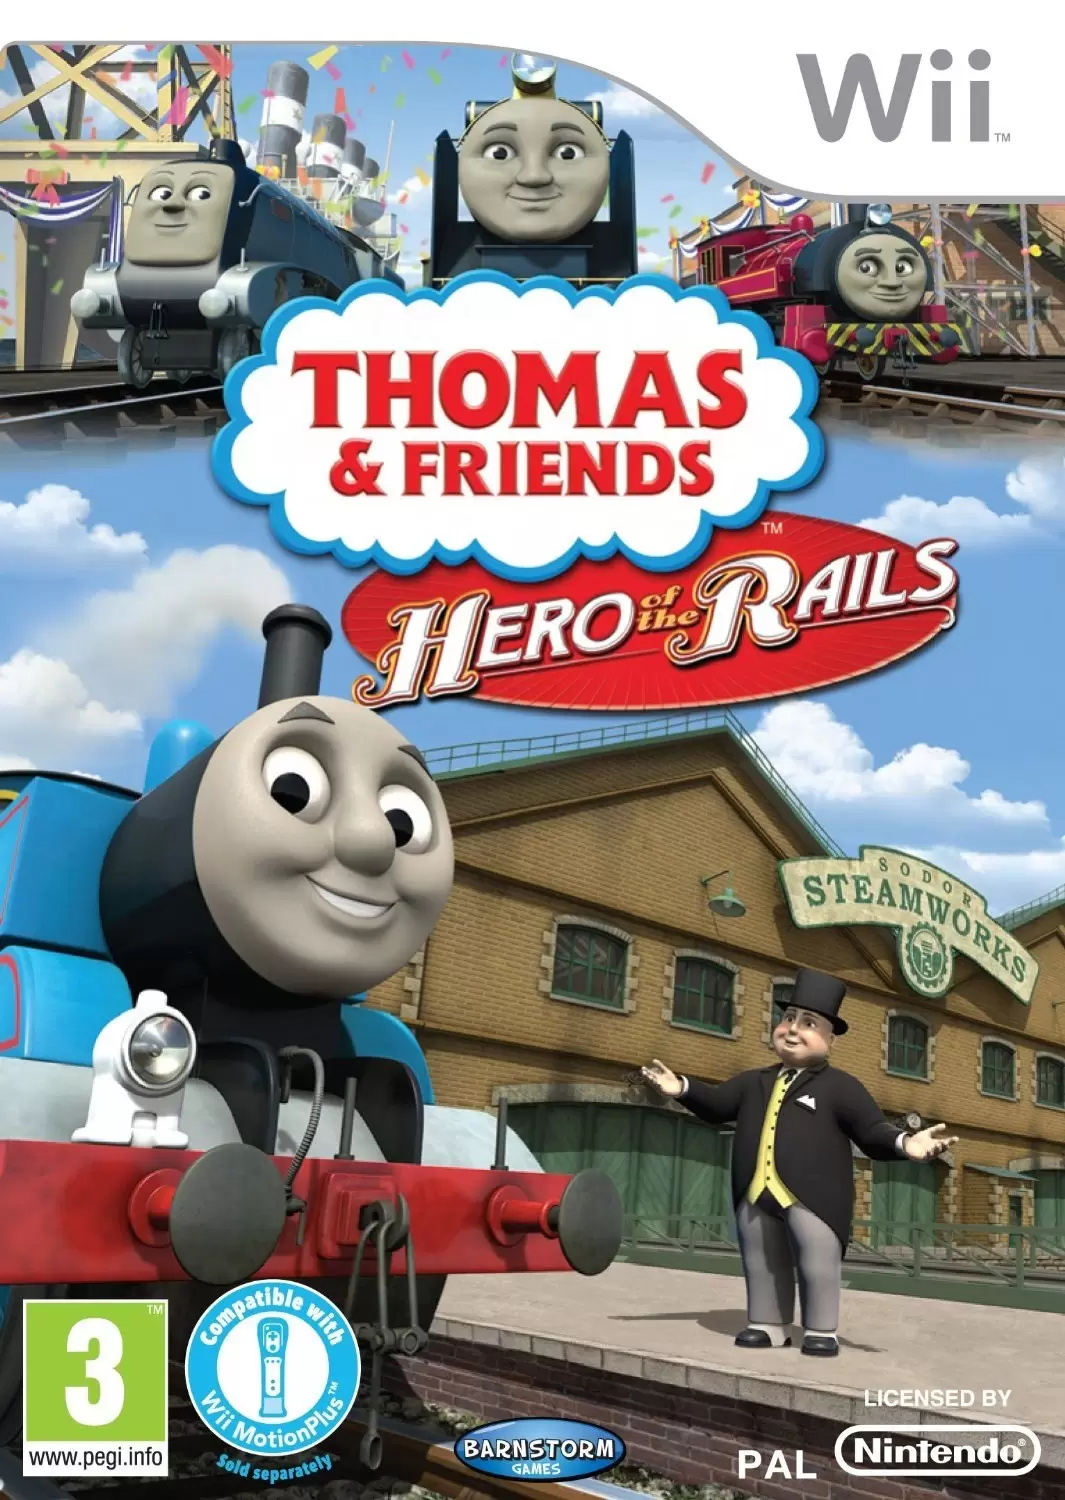 Nintendo Wii Games - Thomas & Friends Hero of the Rails